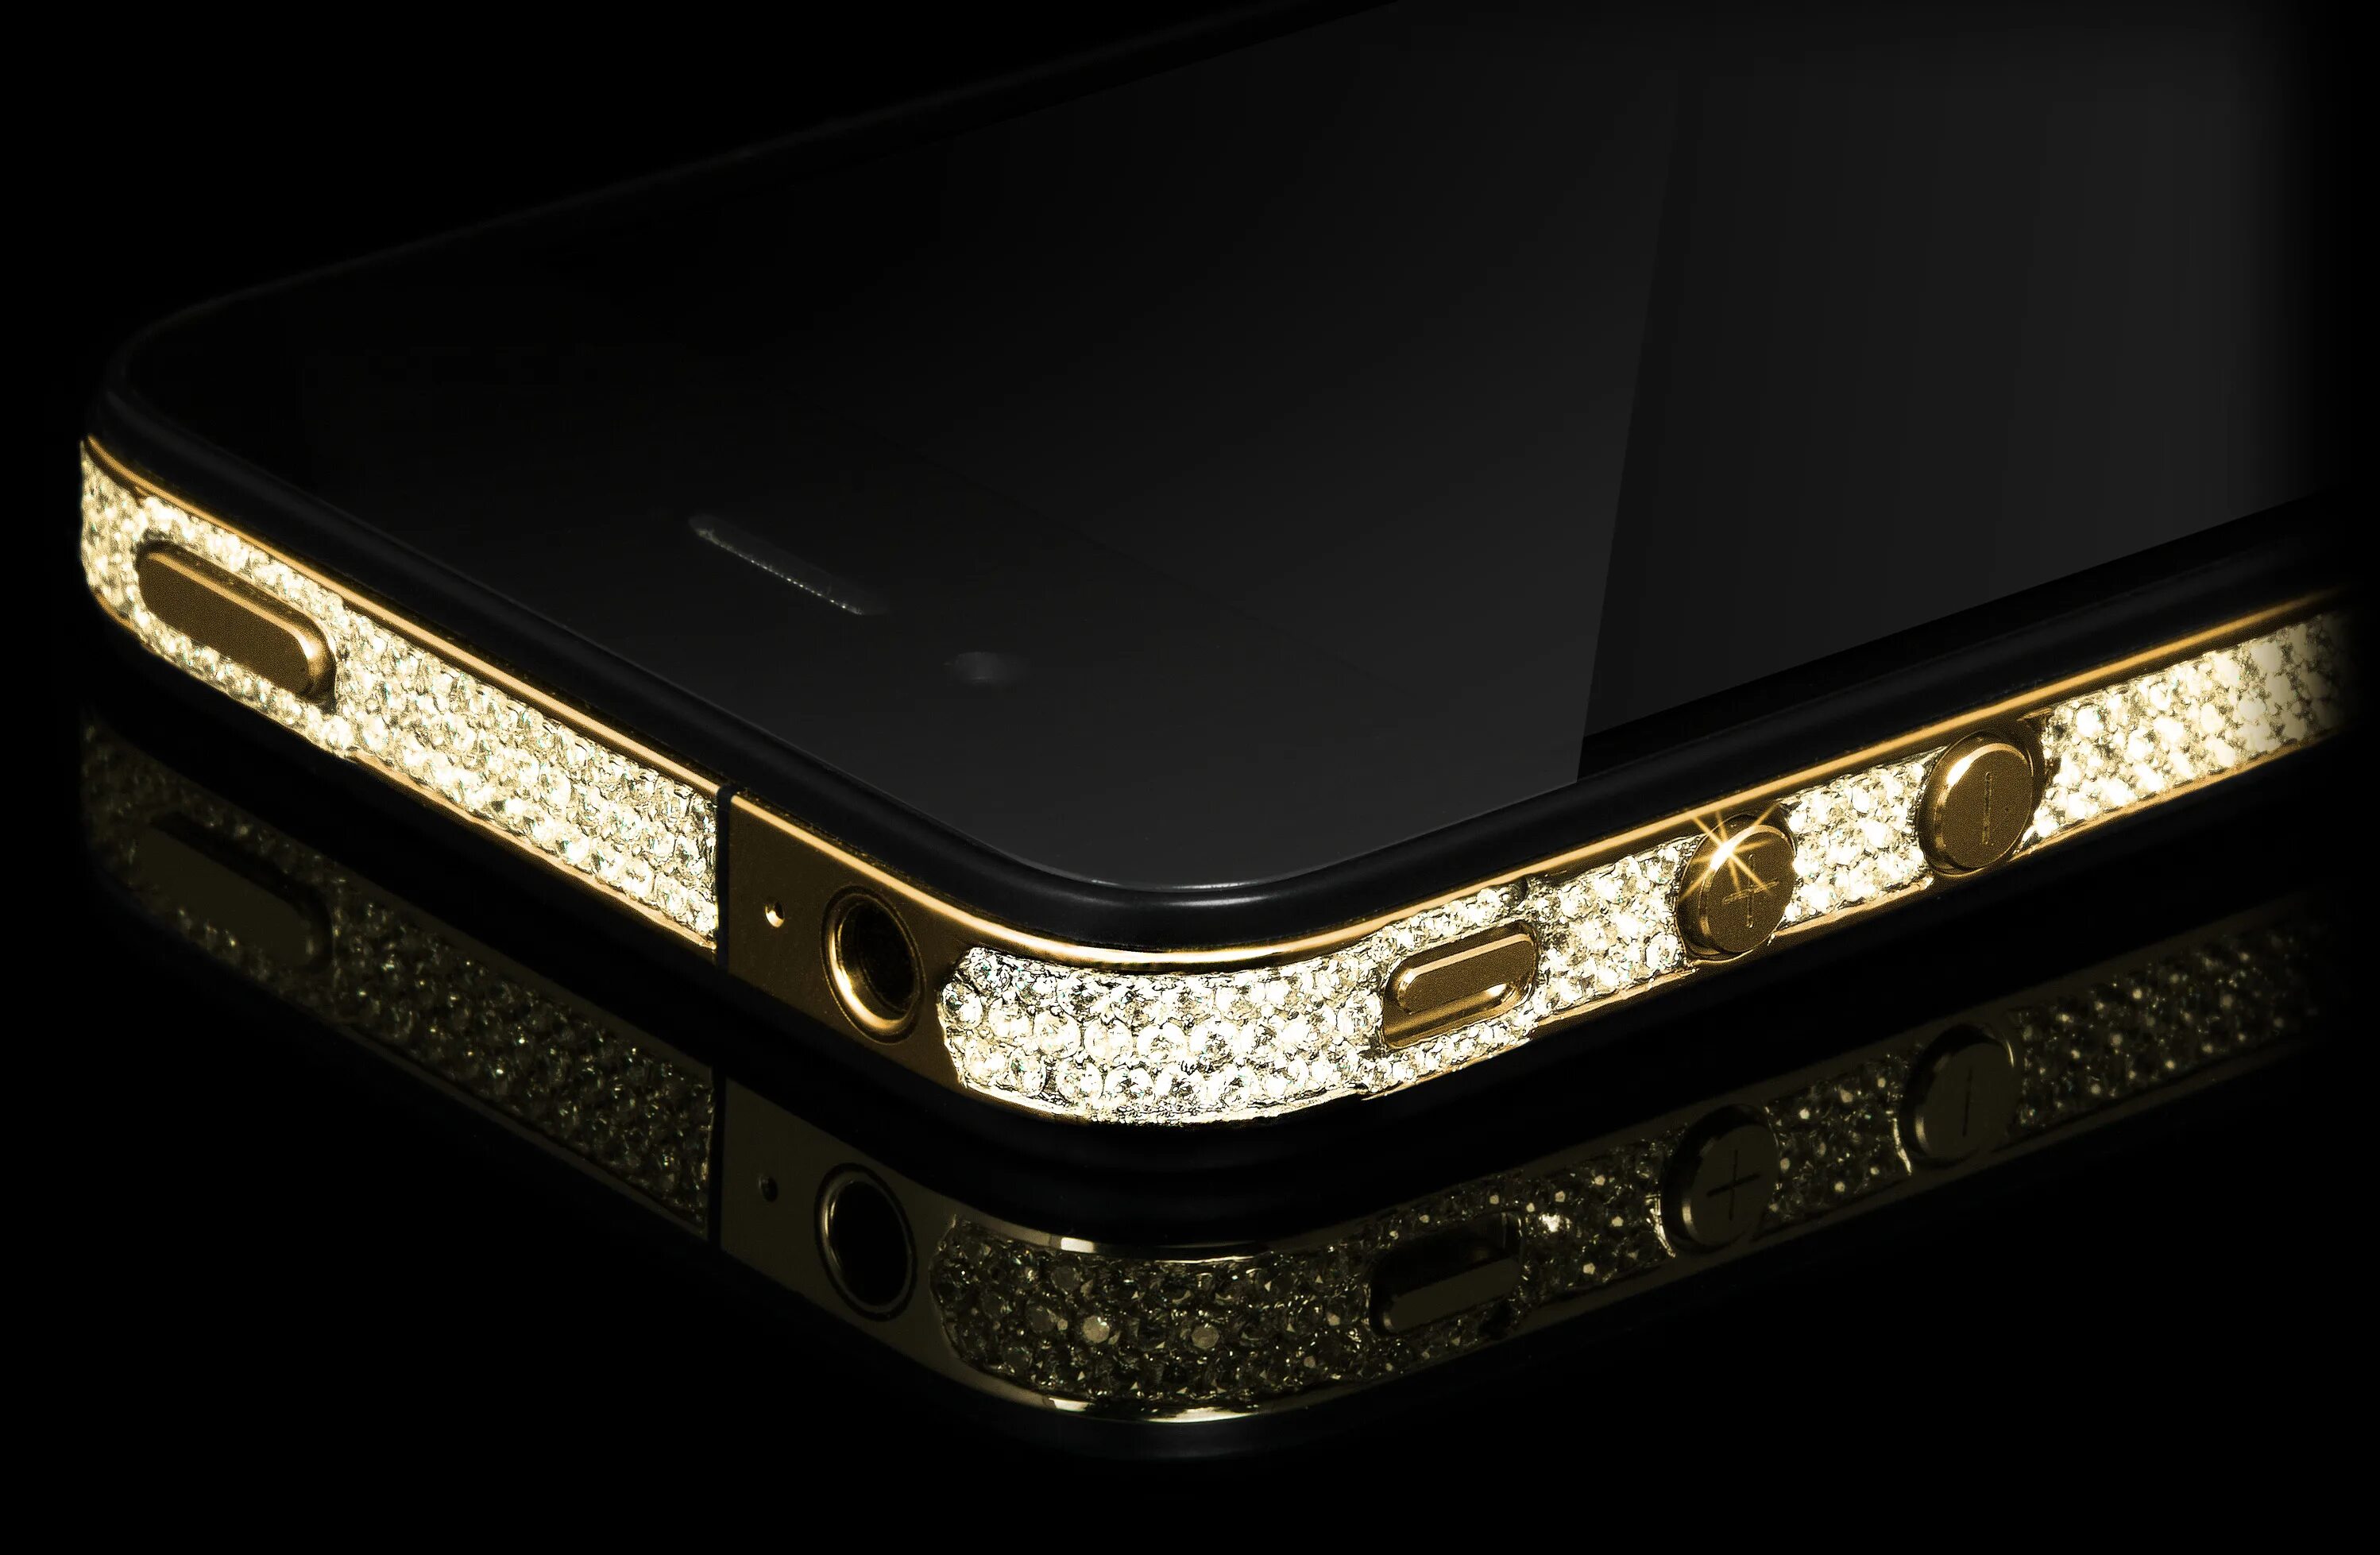 Самые дорогие телефоны фото. Iphone 4s Gold. Iphone 4 Diamond Rose. Айфон Даймонд Роуз эдитион. Iphone 4 Gold.